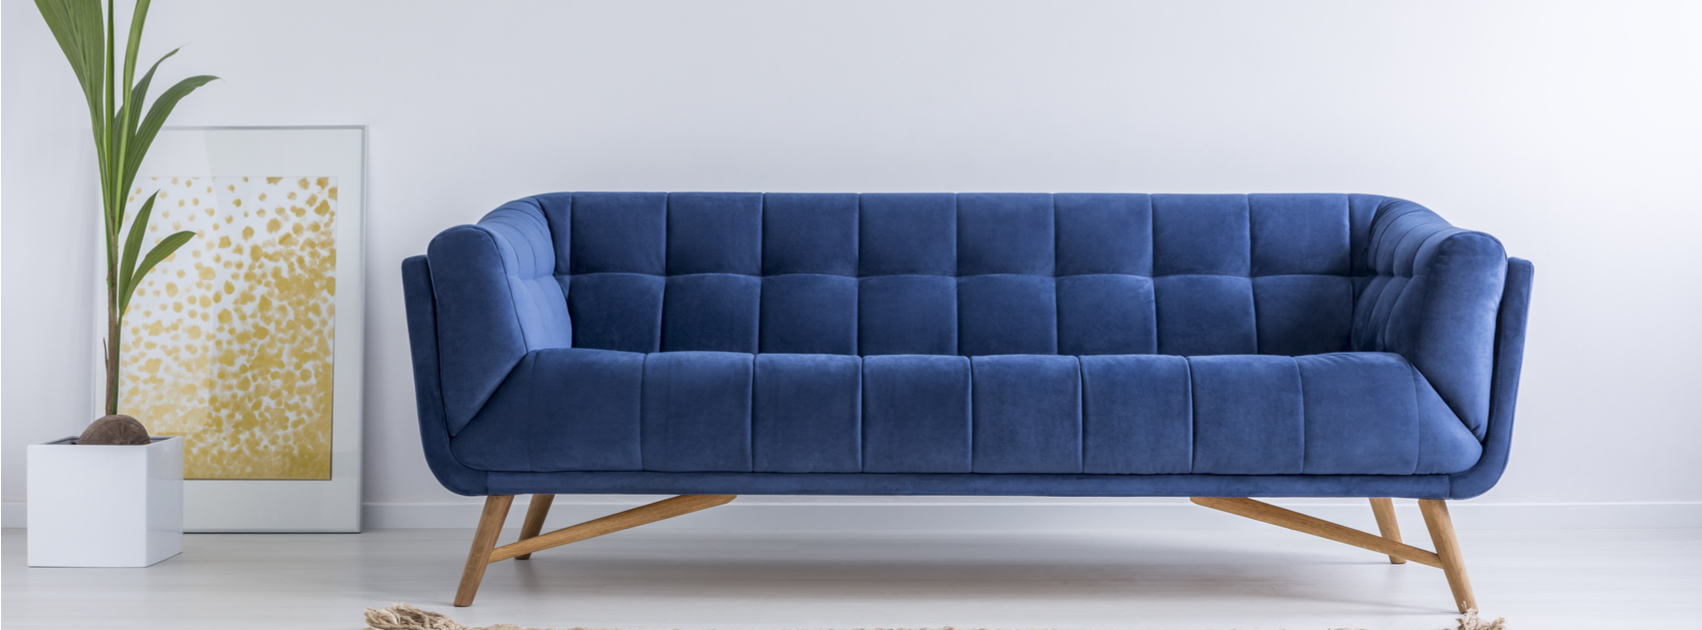 Choosing a Sofa: 5 Tips For Choosing The Right Sofa